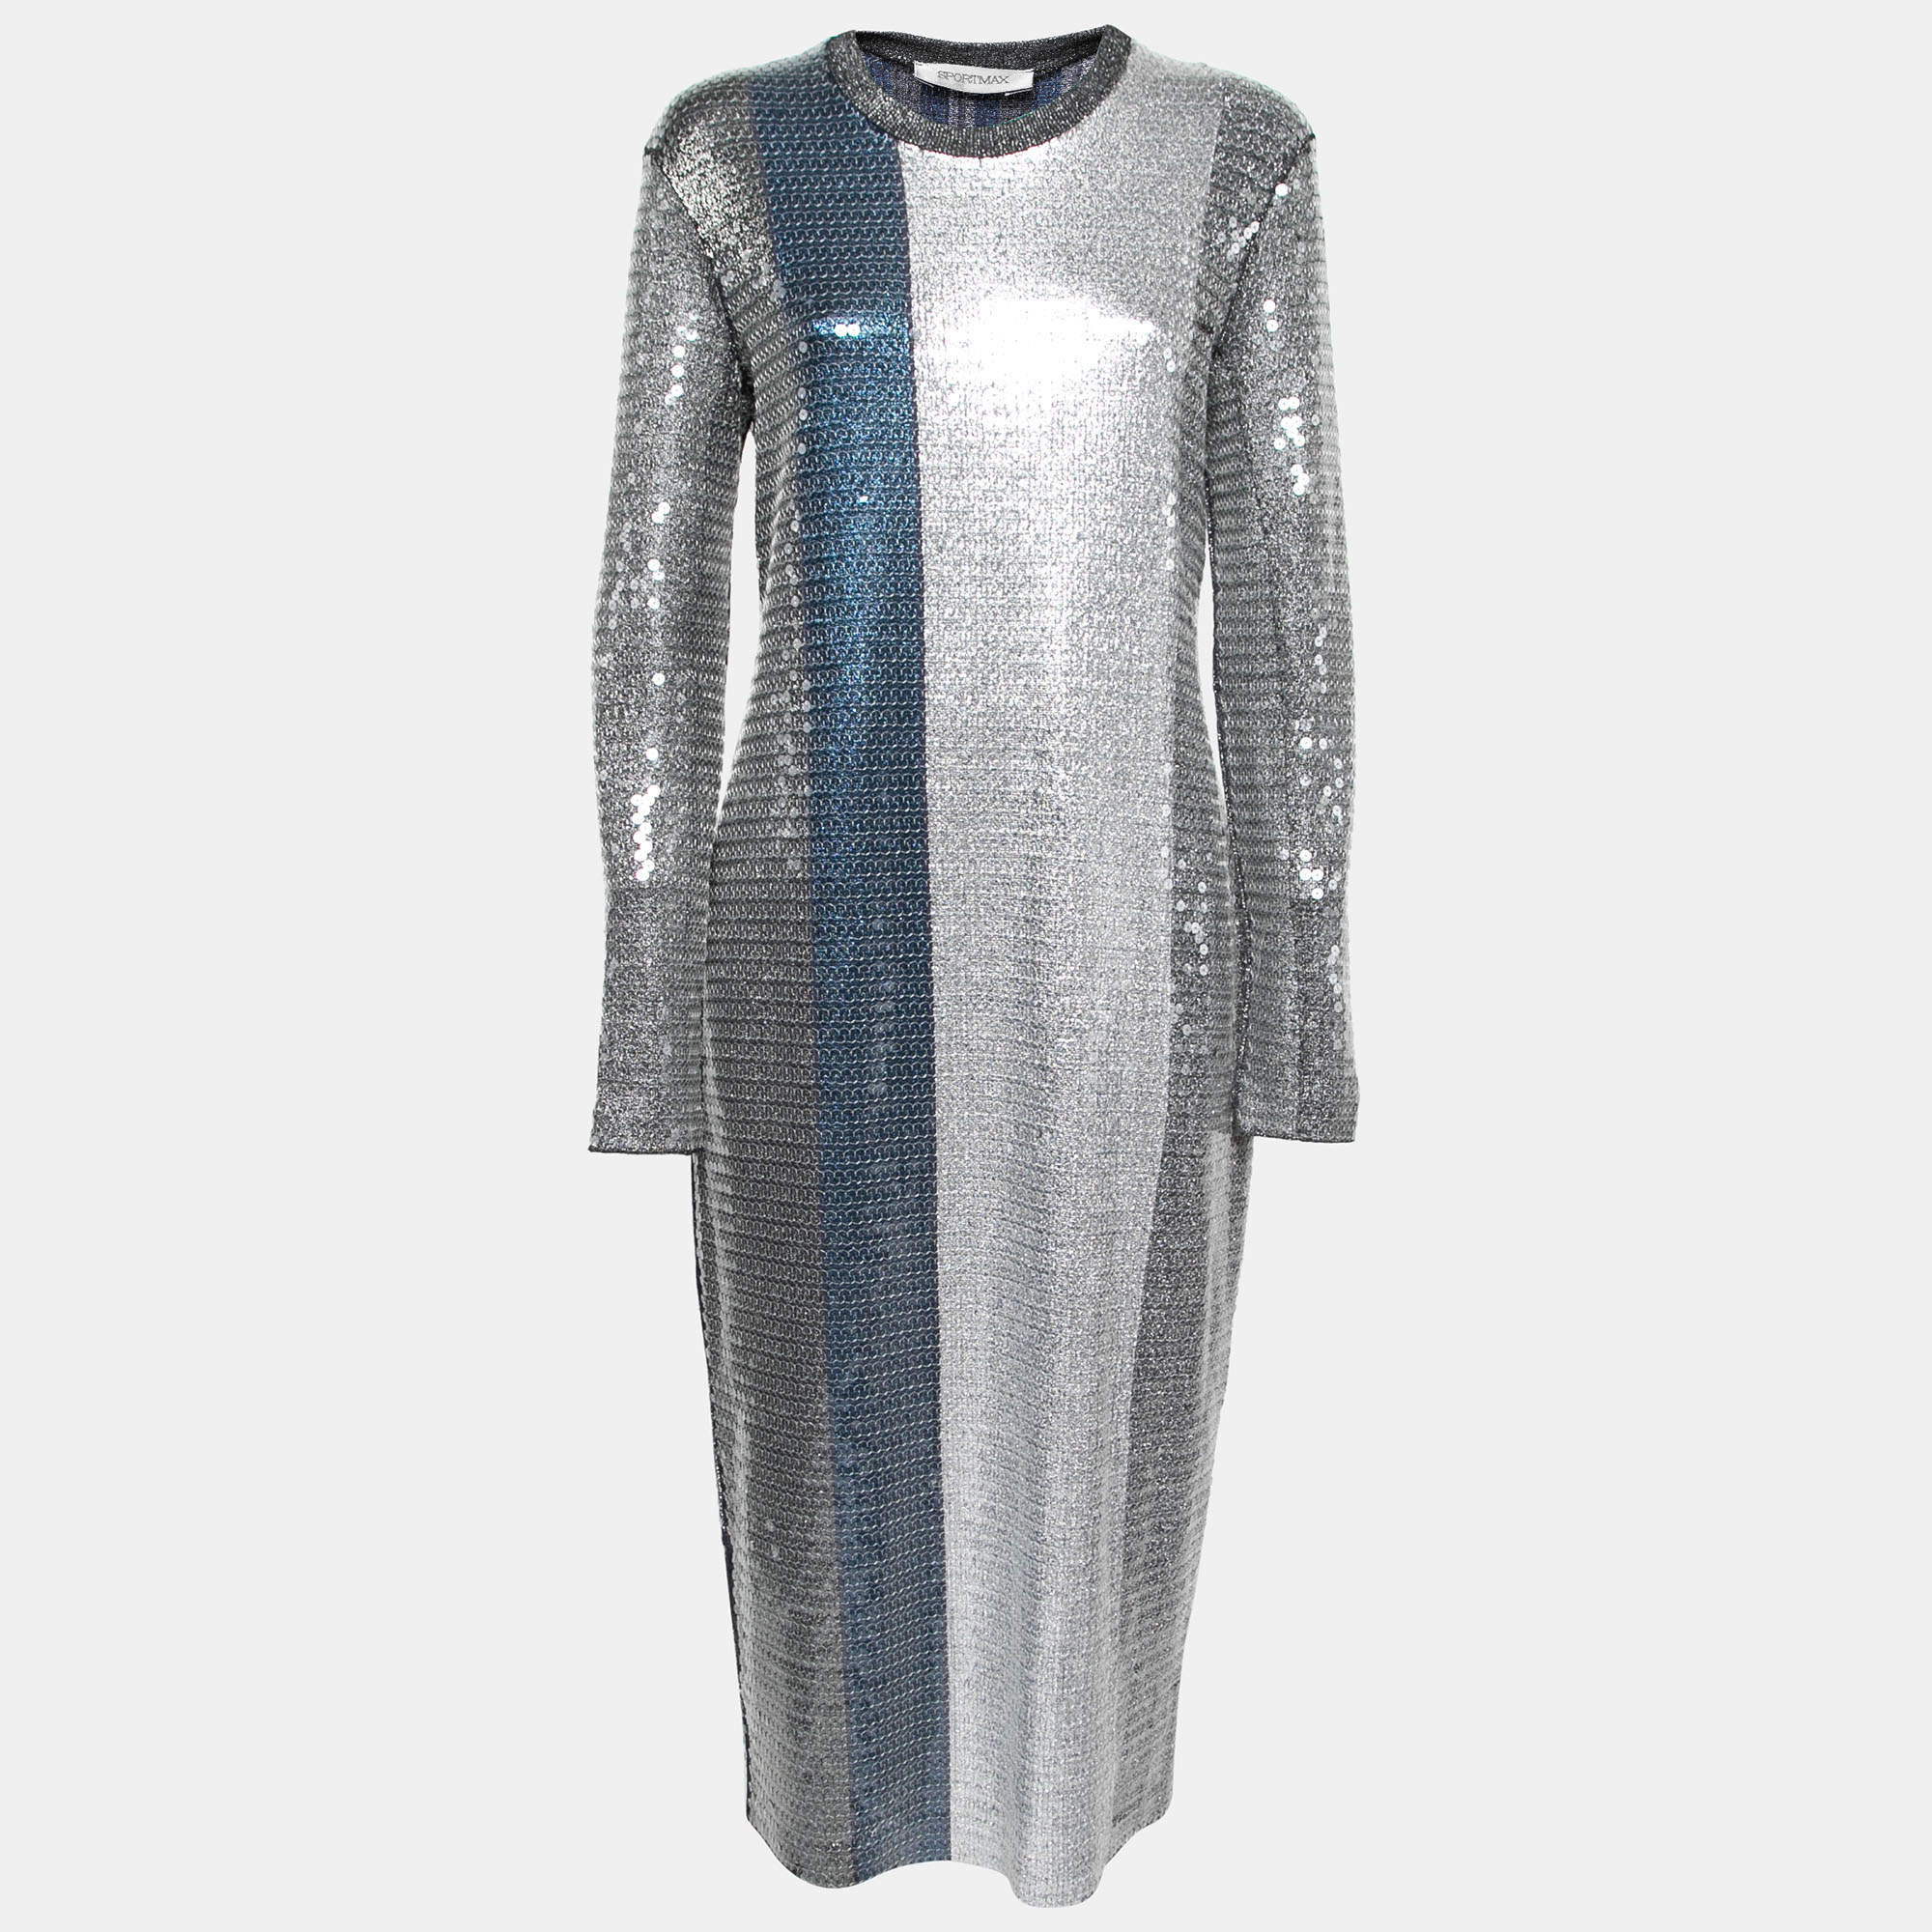 Sportmax Metallic Stripe Knit Sequin Embellished Long Sleeve Dress L